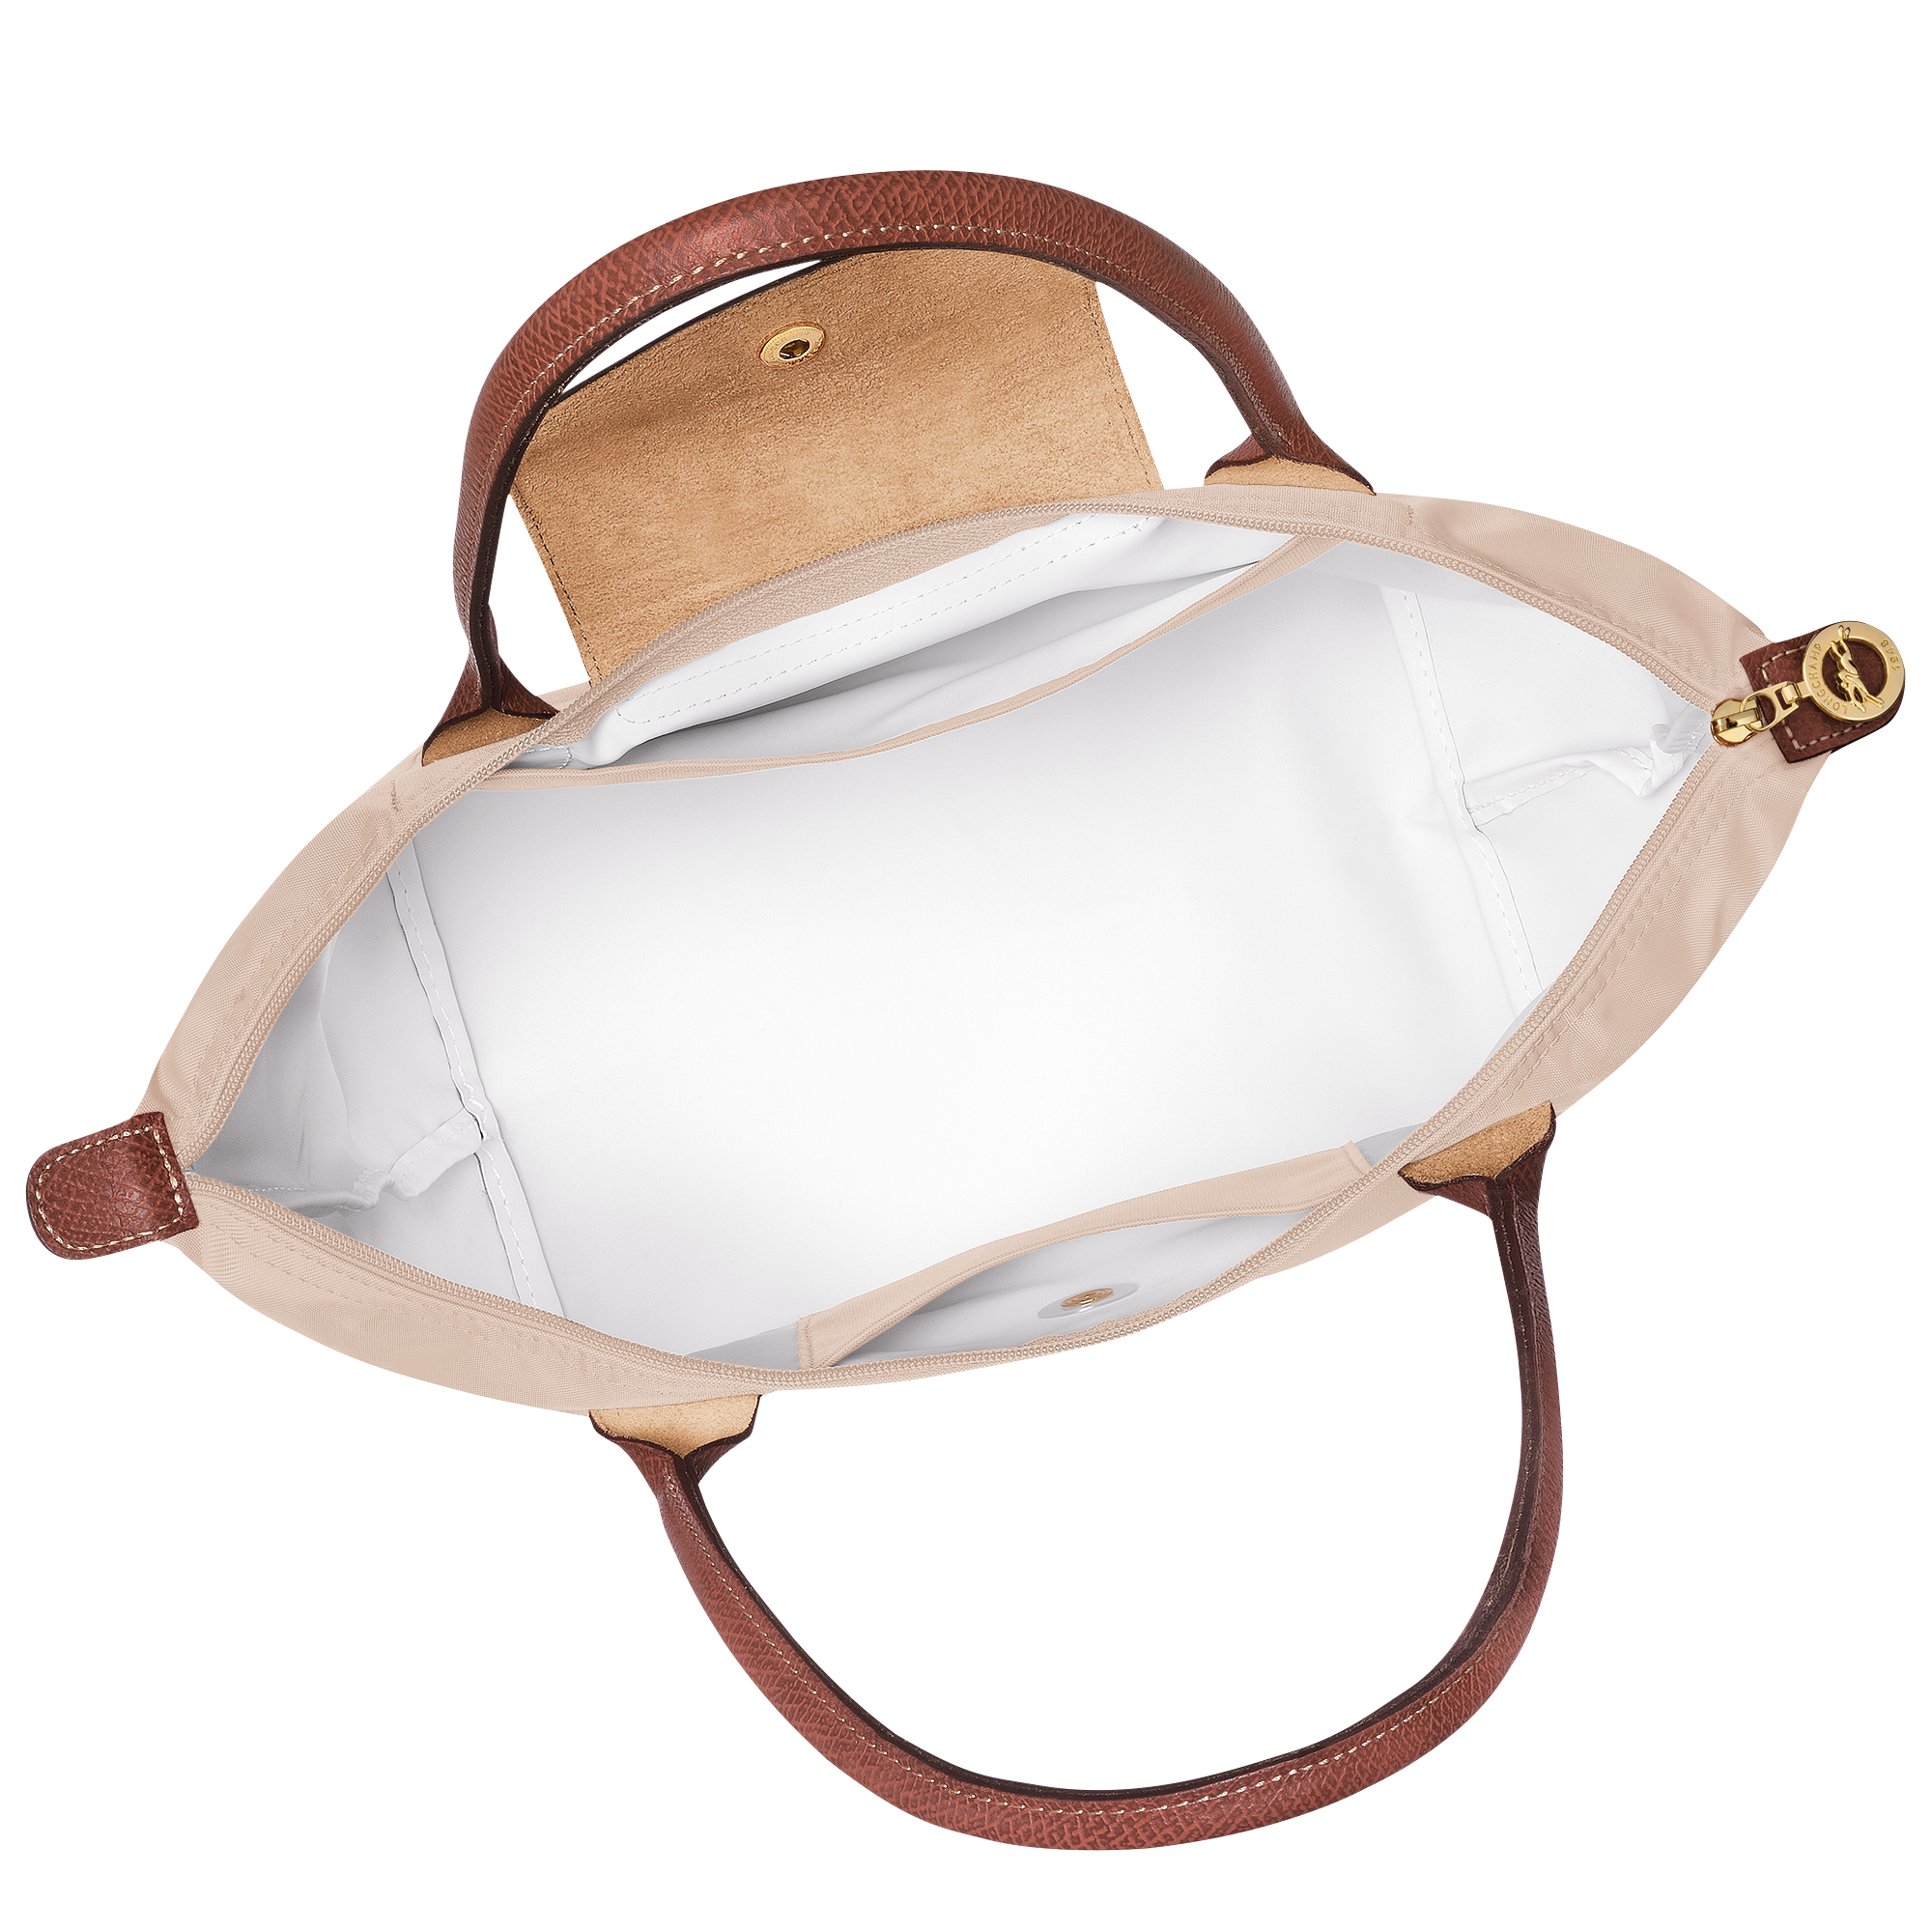 Le Pliage 原創系列 肩揹袋 M, 白紙色